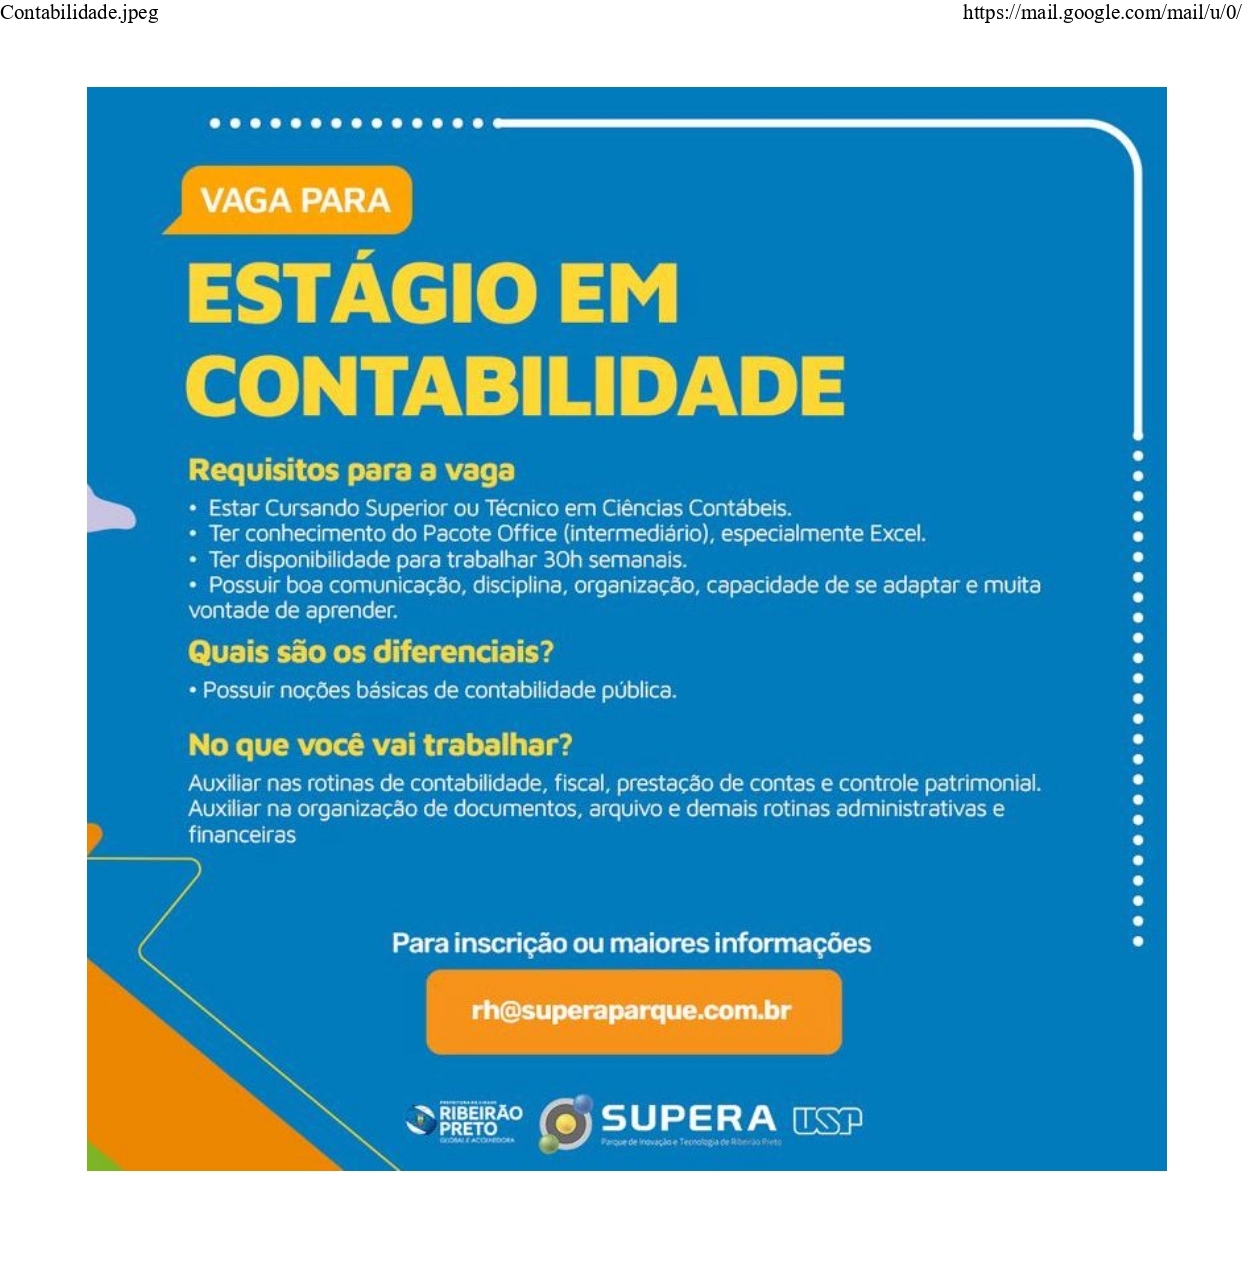 Supera_Contabilidade_page-0001.jpg